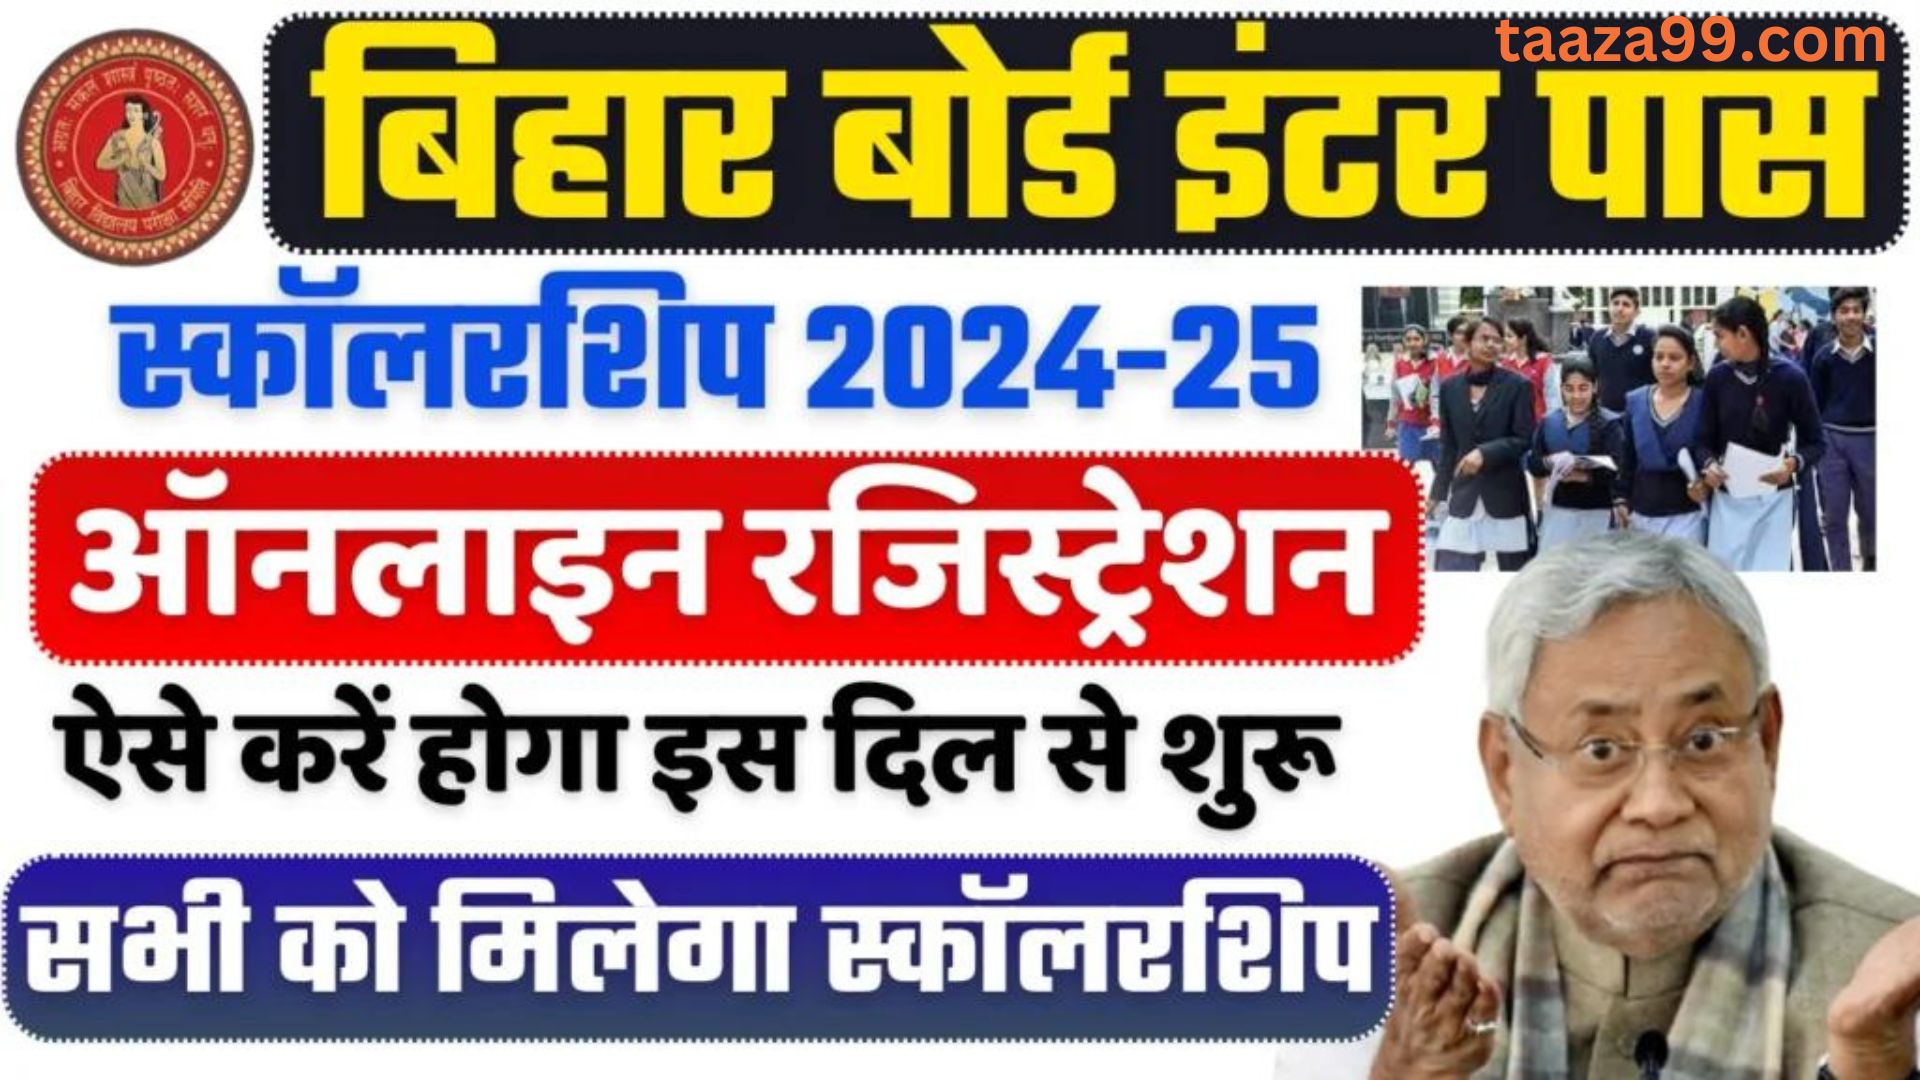 Bihar Board Inter Pass Scholarship 2024